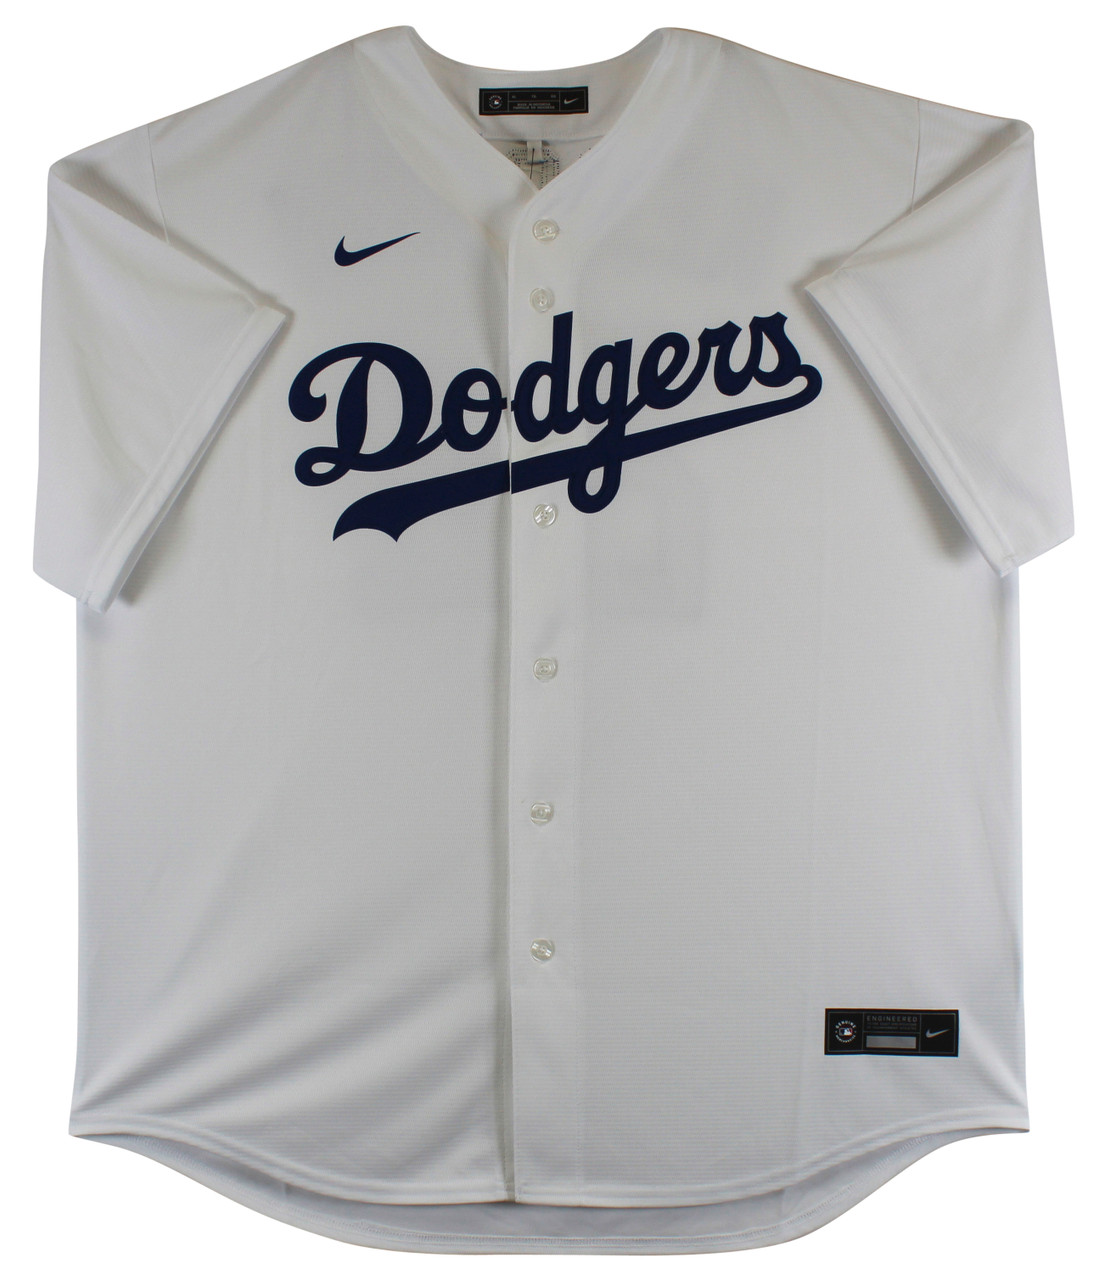 Clayton Kershaw Autographed Los Angeles Dodgers Nike Baseball